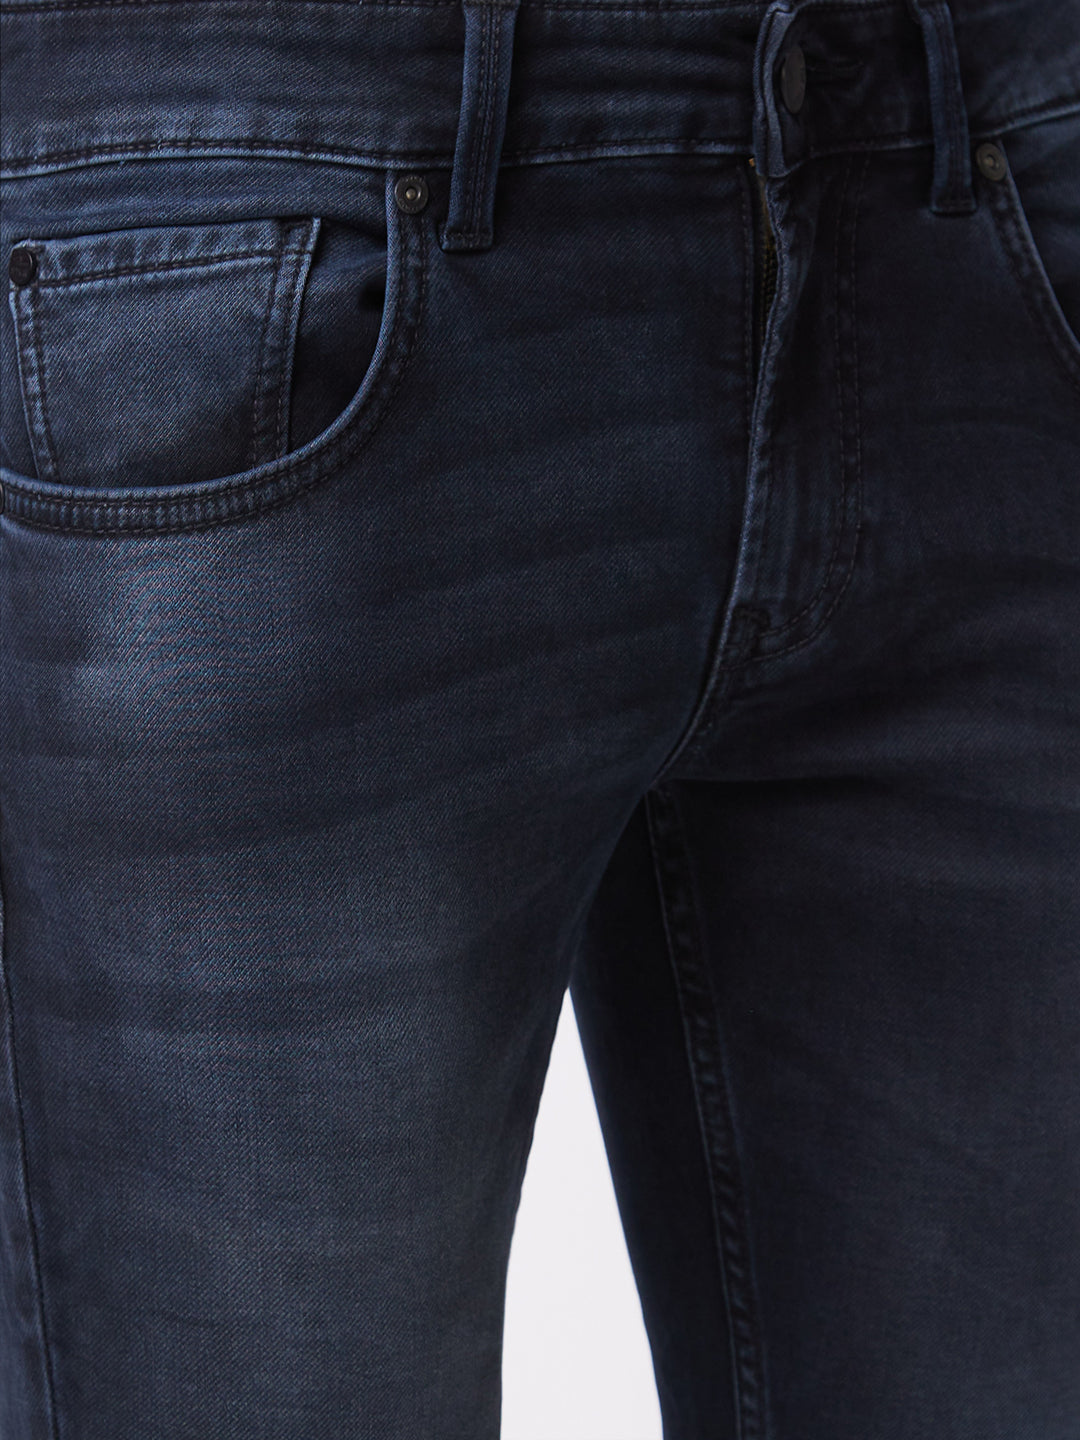 Spykar Low Rise Super Slim Fit Black Jeans For Men